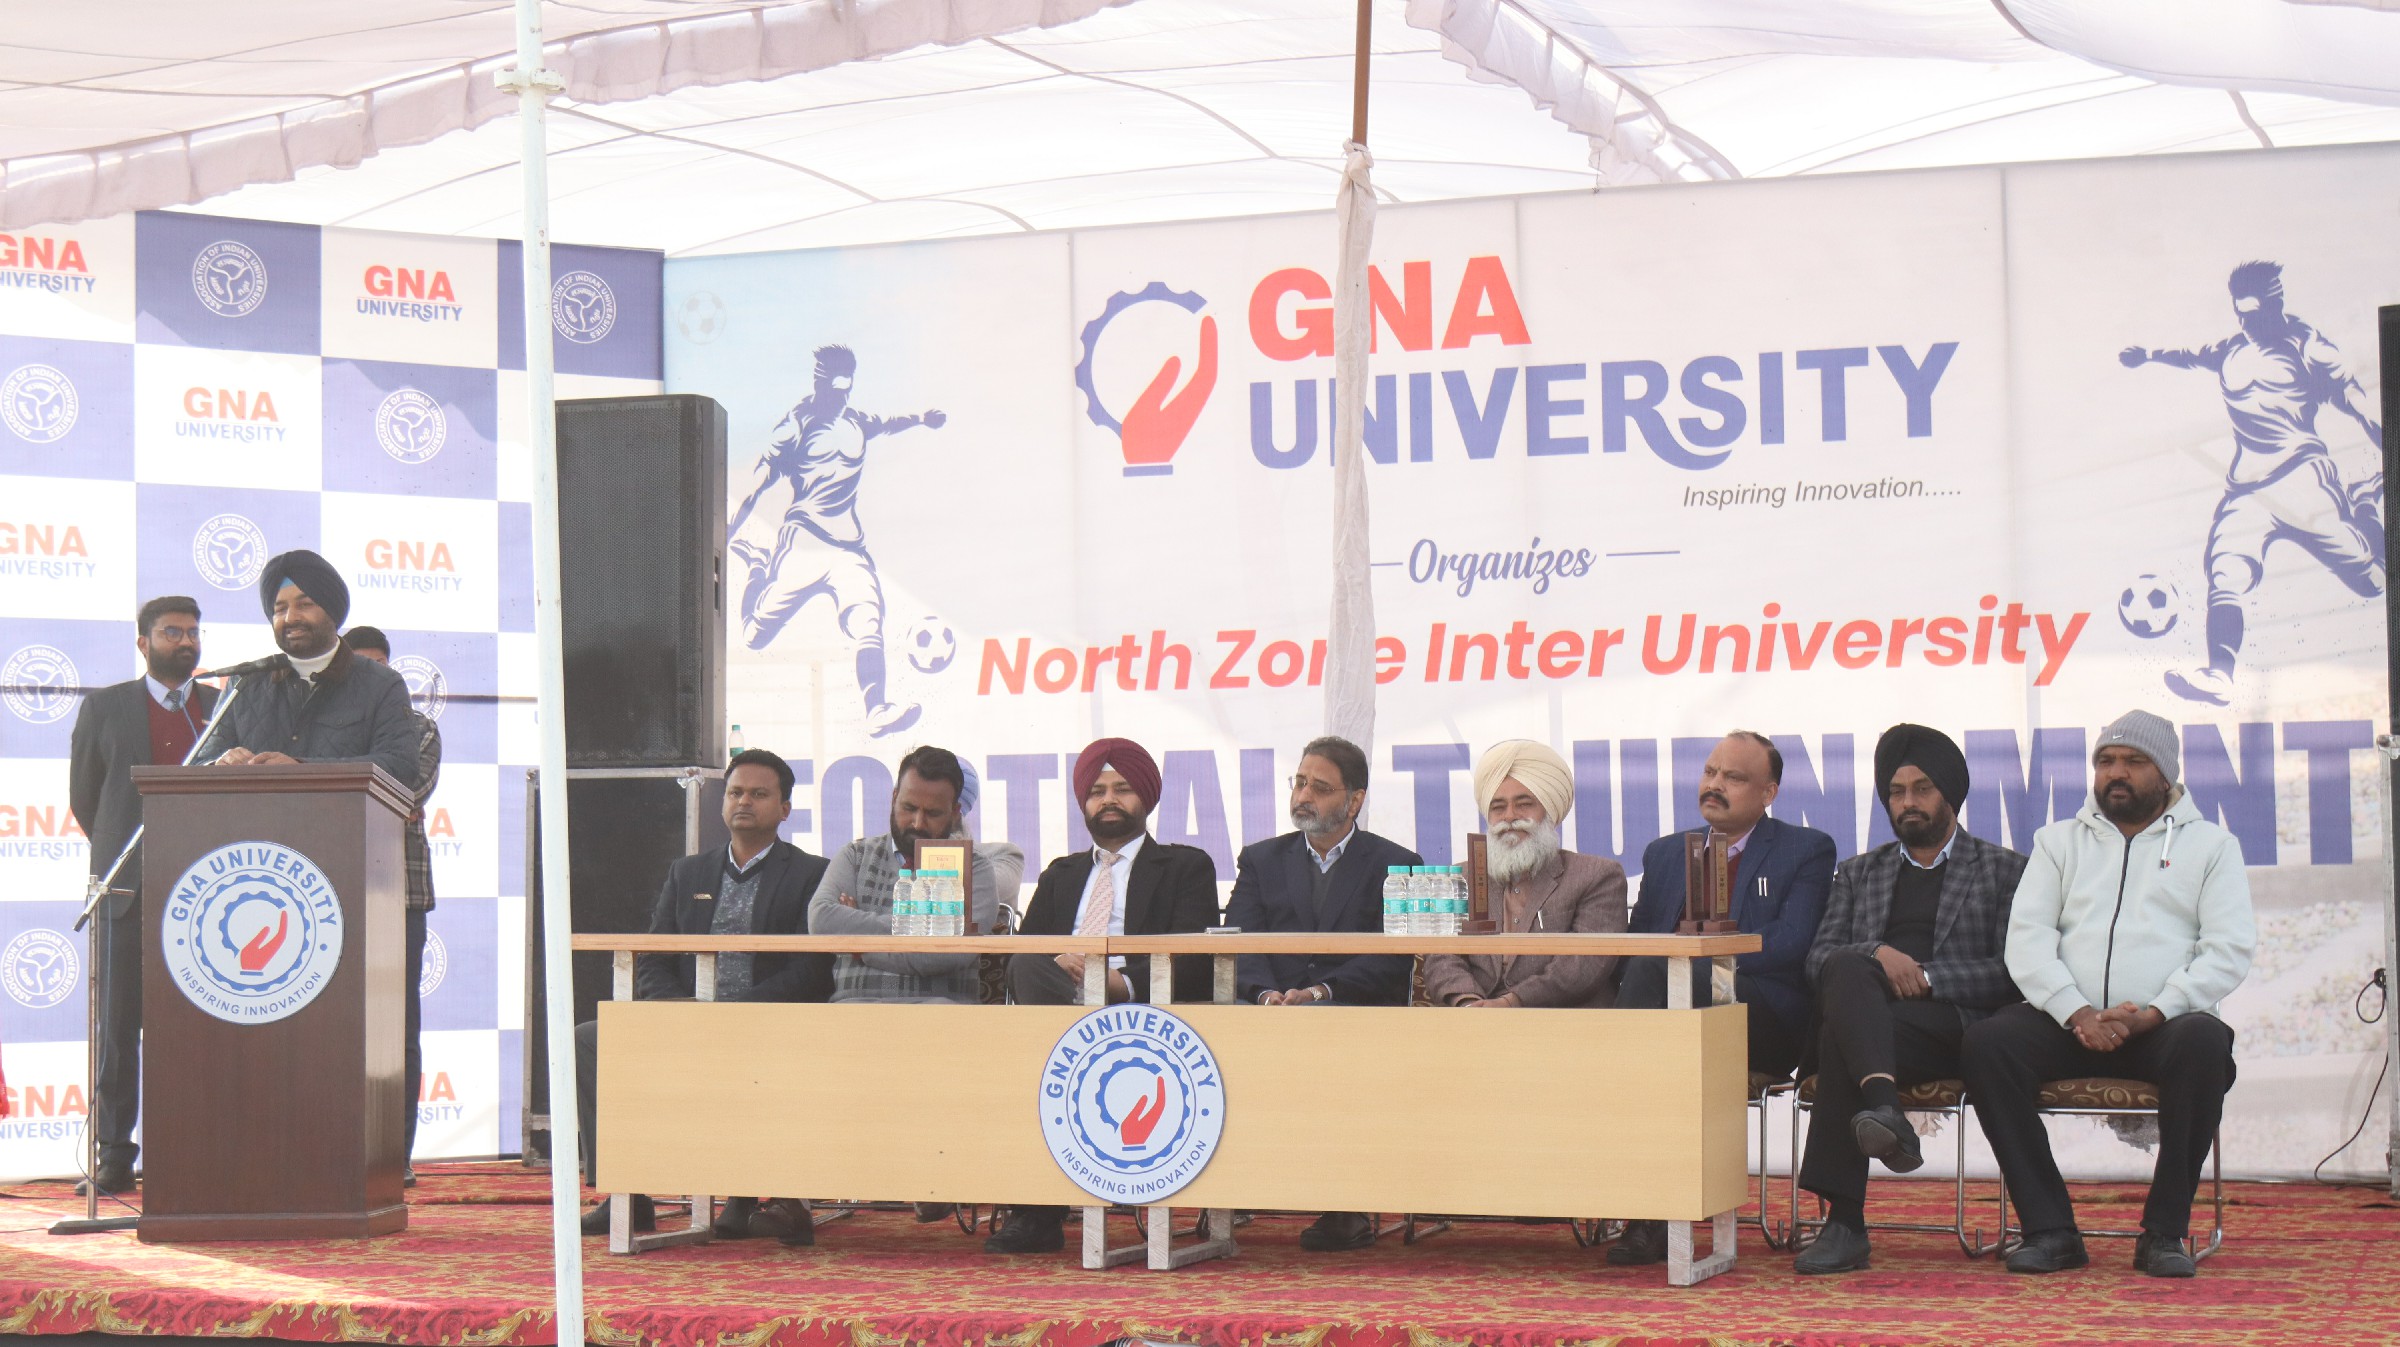 GNA University organized AIU North Zone Inter University Football Tournament